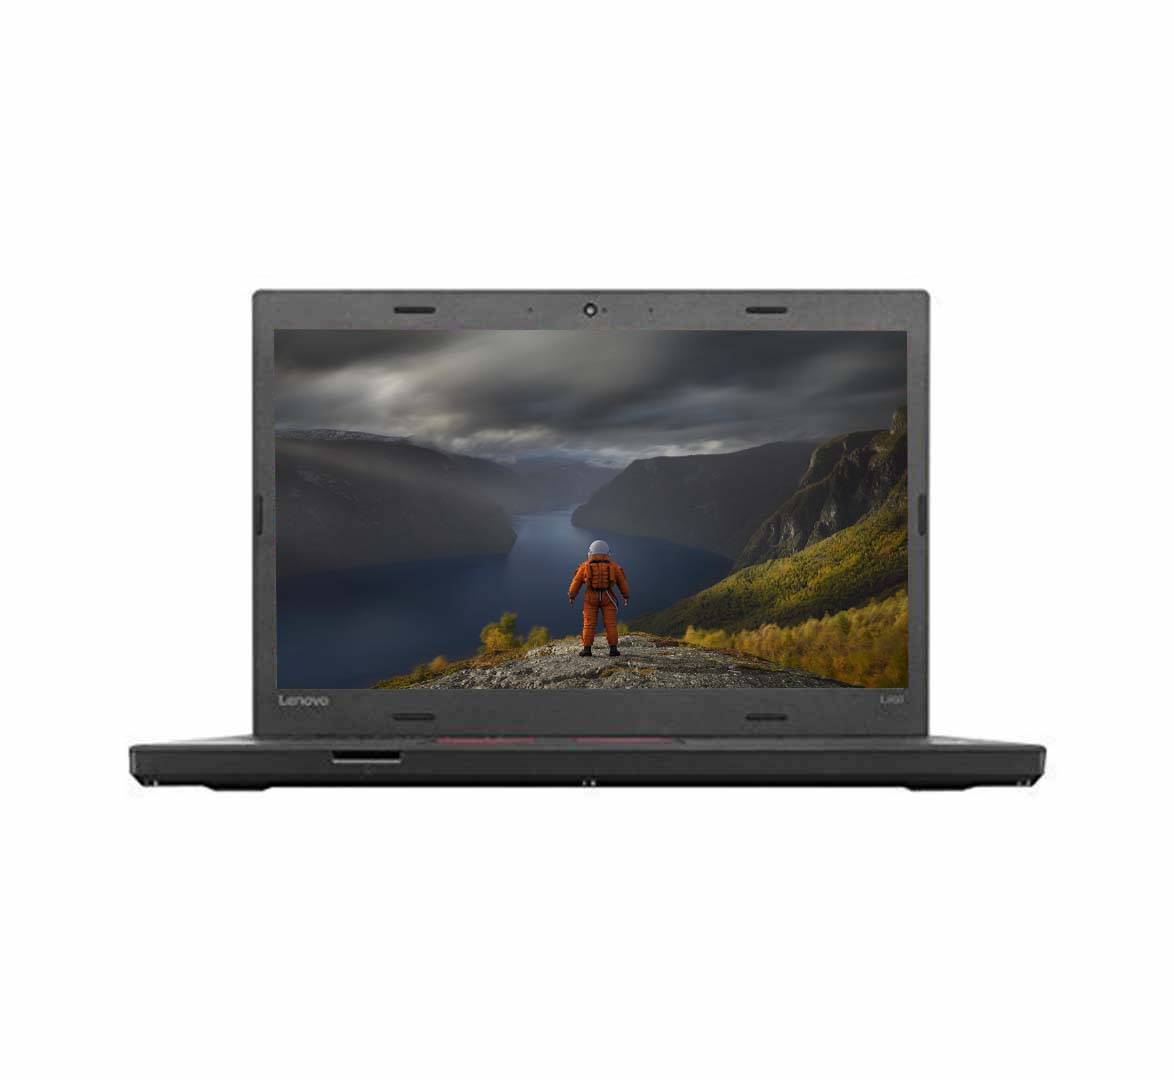 Lenovo ThinkPad L460 Business Laptop, Intel Core i3-6th Generation CPU, 8GB RAM, 500GB HDD, 14 inch Display, Windows 10 Pro